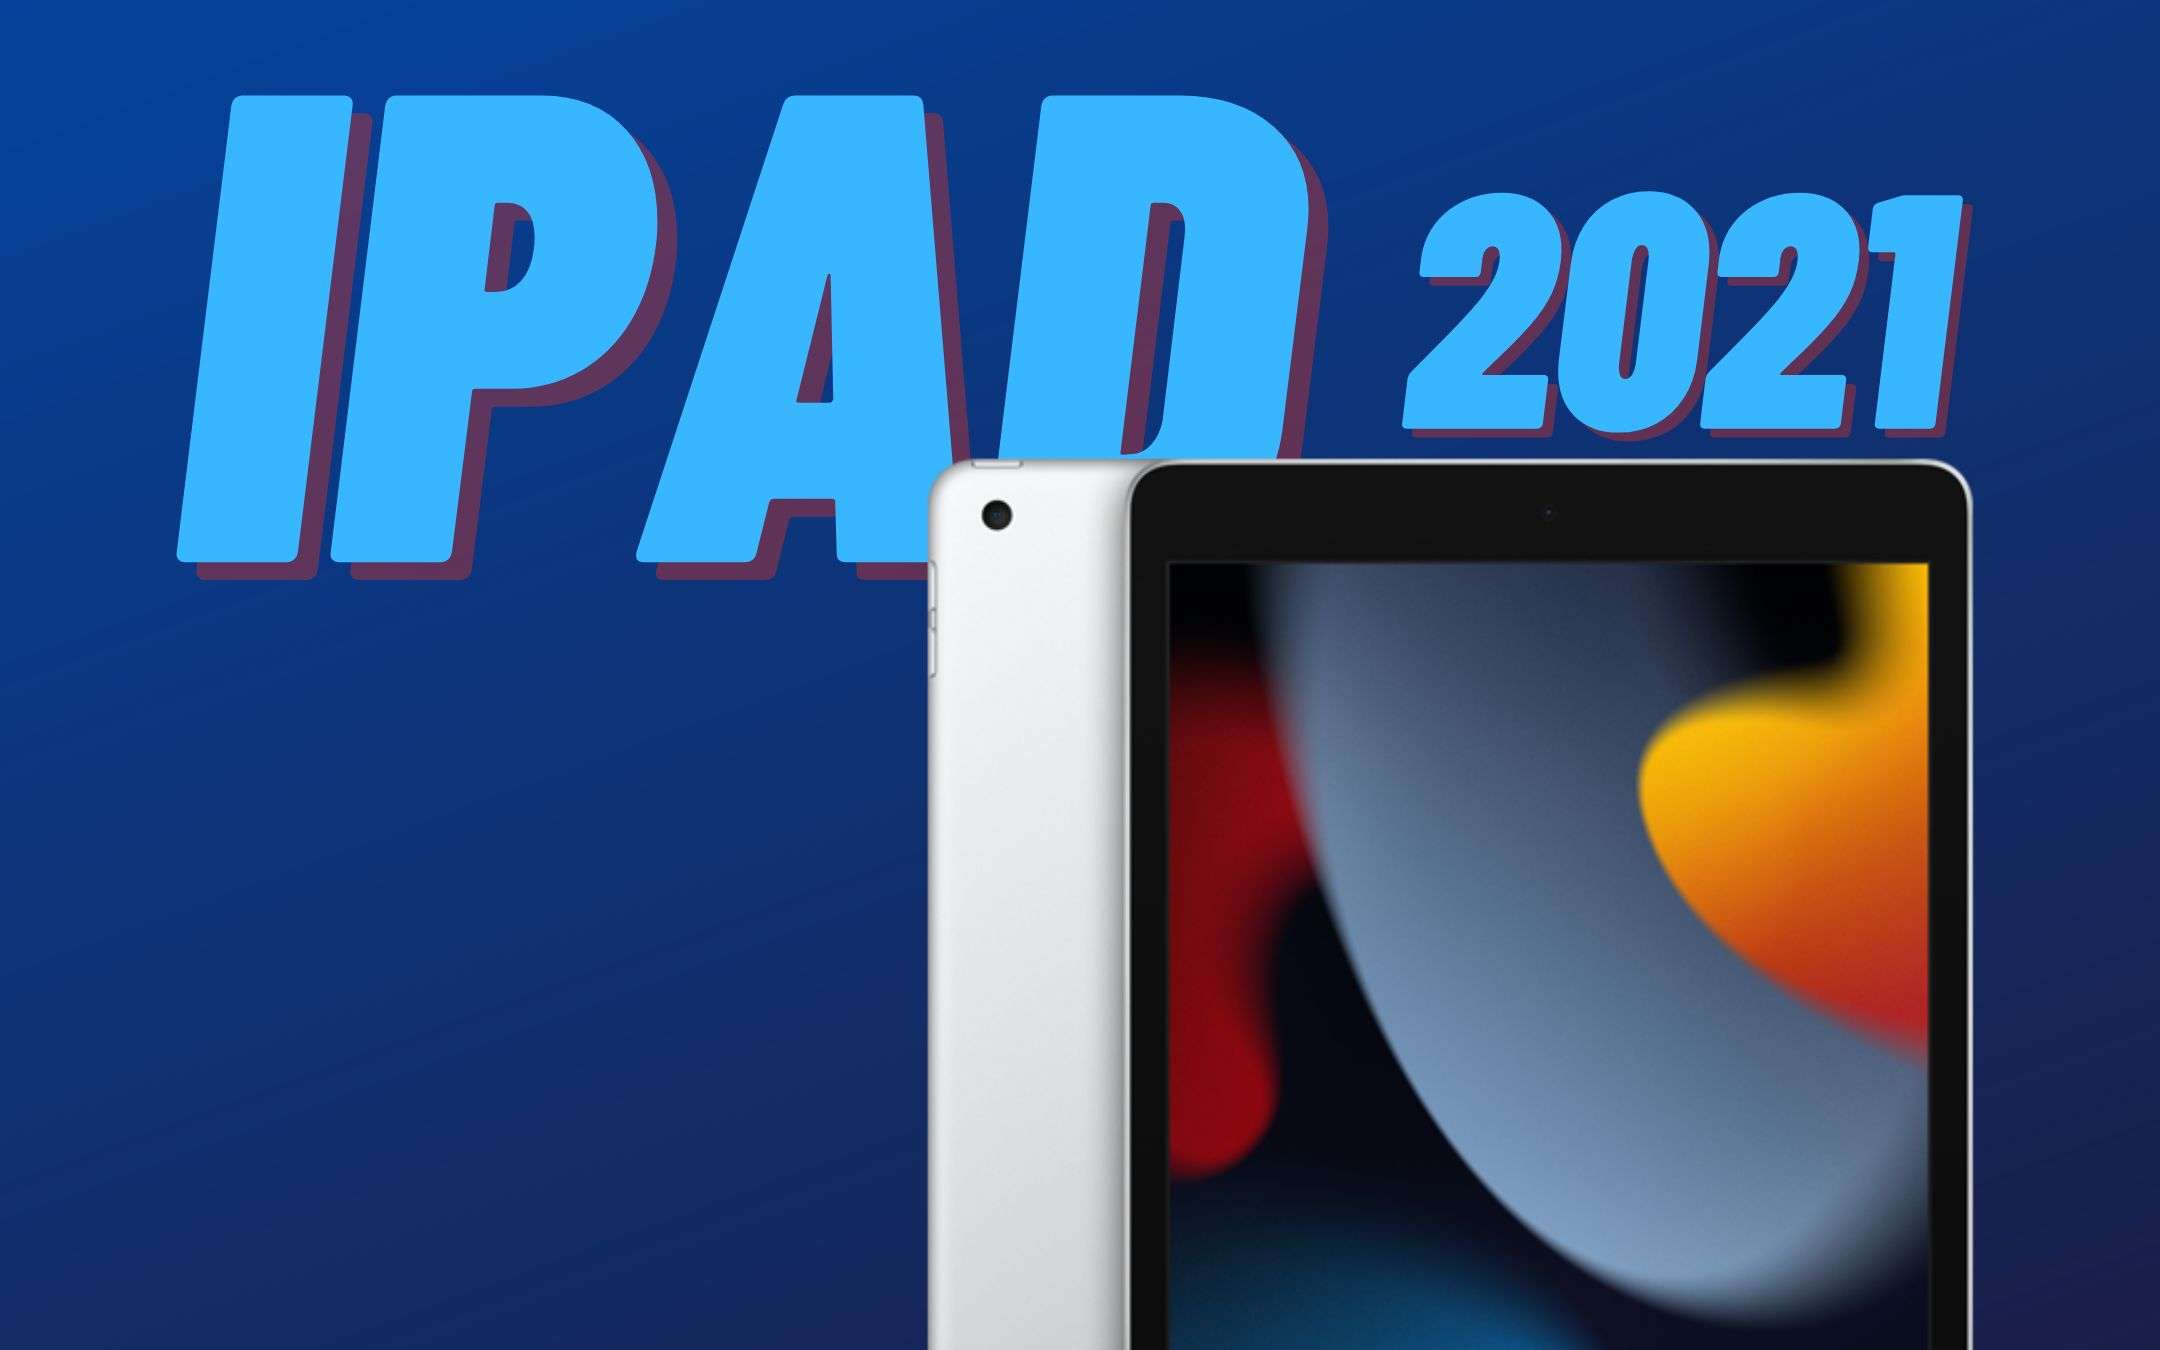 Ha senso comprare oggi un iPad 2021?